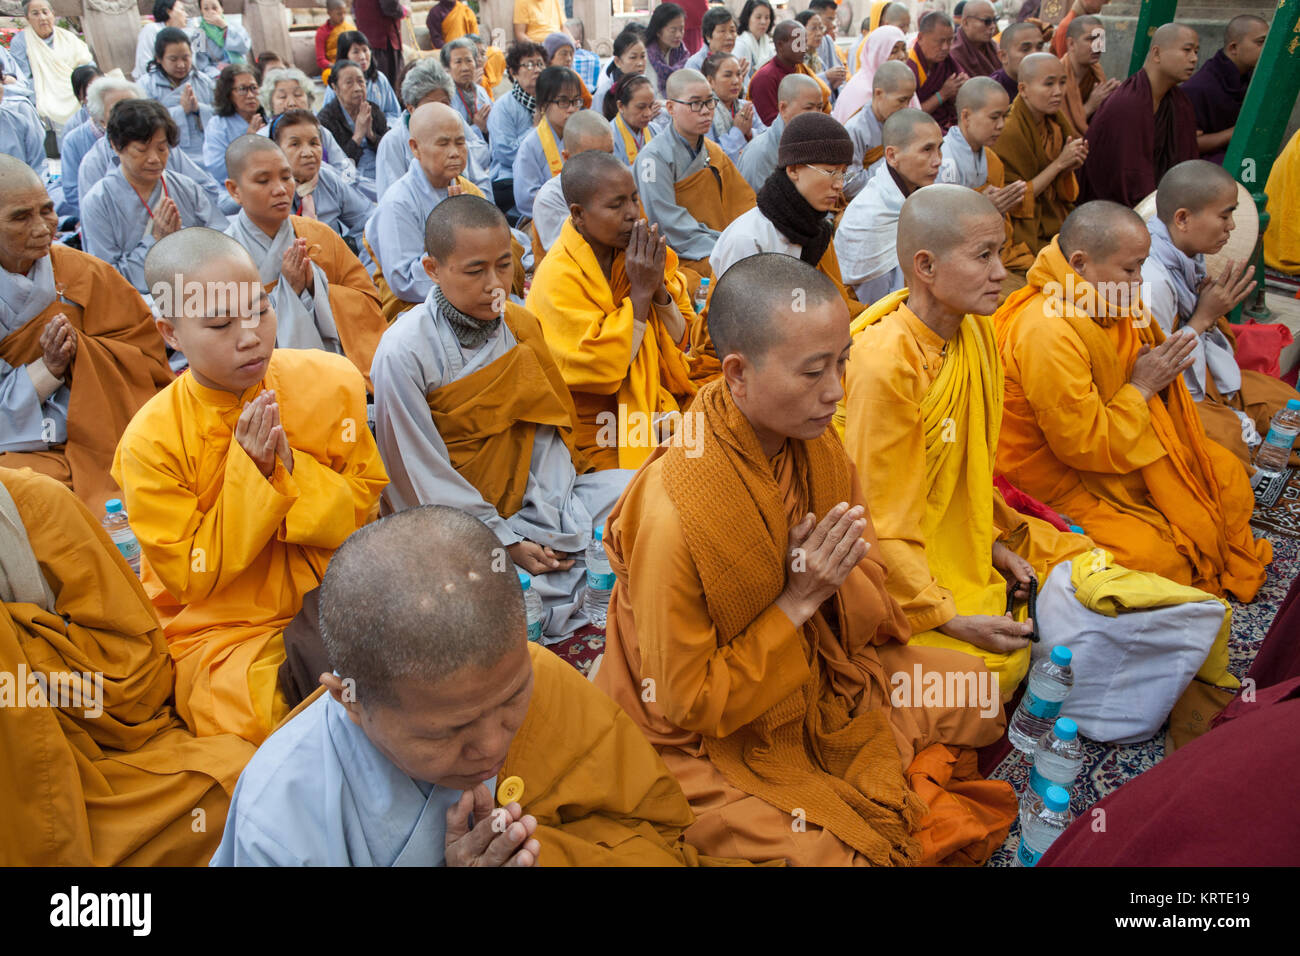 Pilgrims in saffron robes pray beneath the bodhi tree at the Mahabodhi Temple in Bodhgaya, India Stock Photo